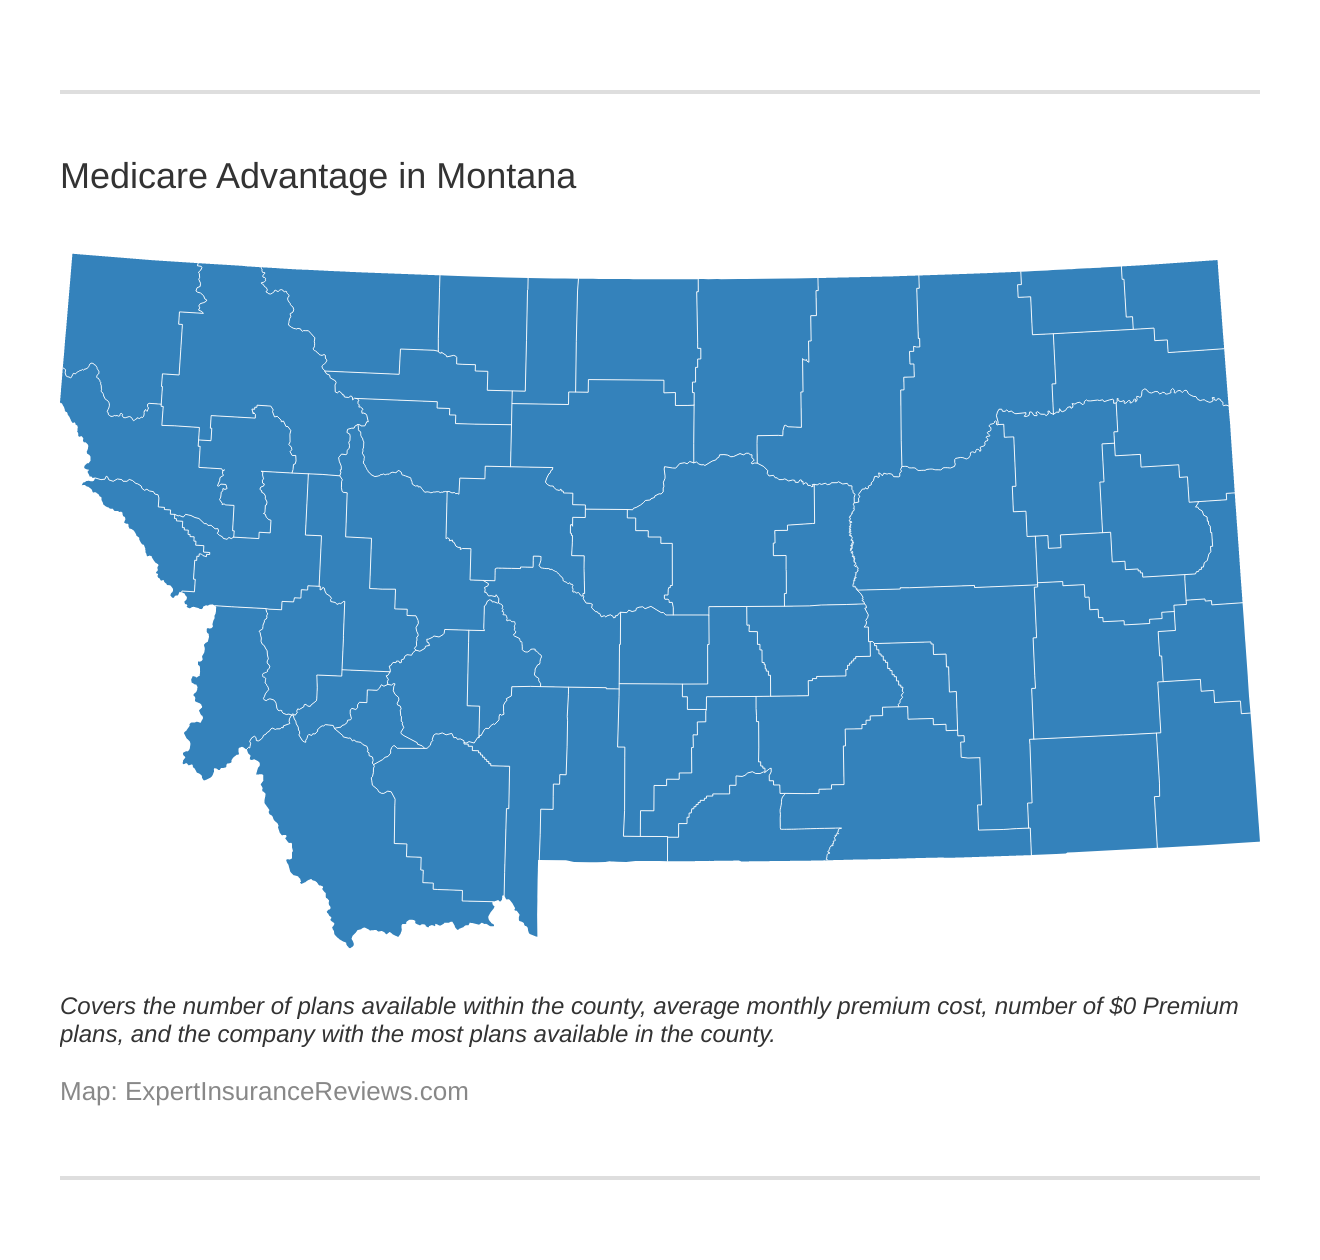 Medicare Advantage in Montana